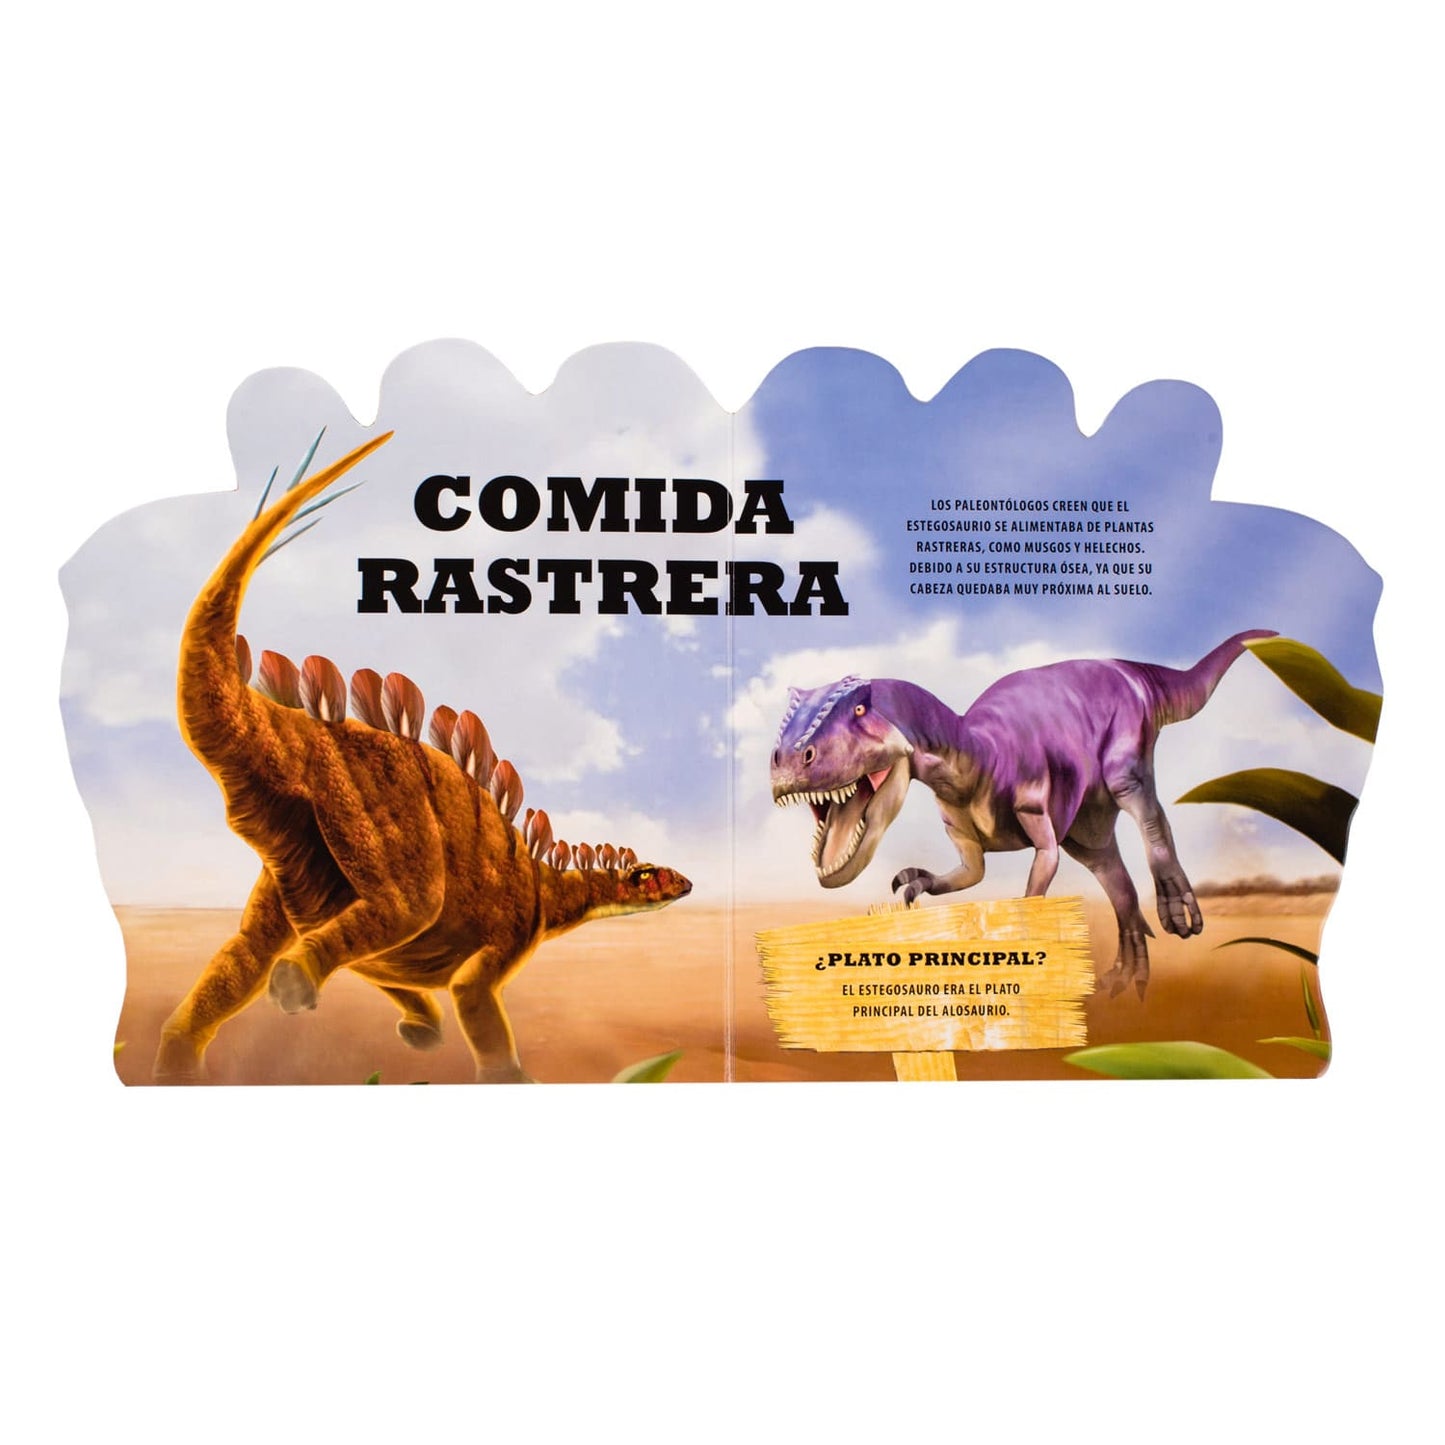 Increíbles Dinos Estegosaurio (Spanish Edition)